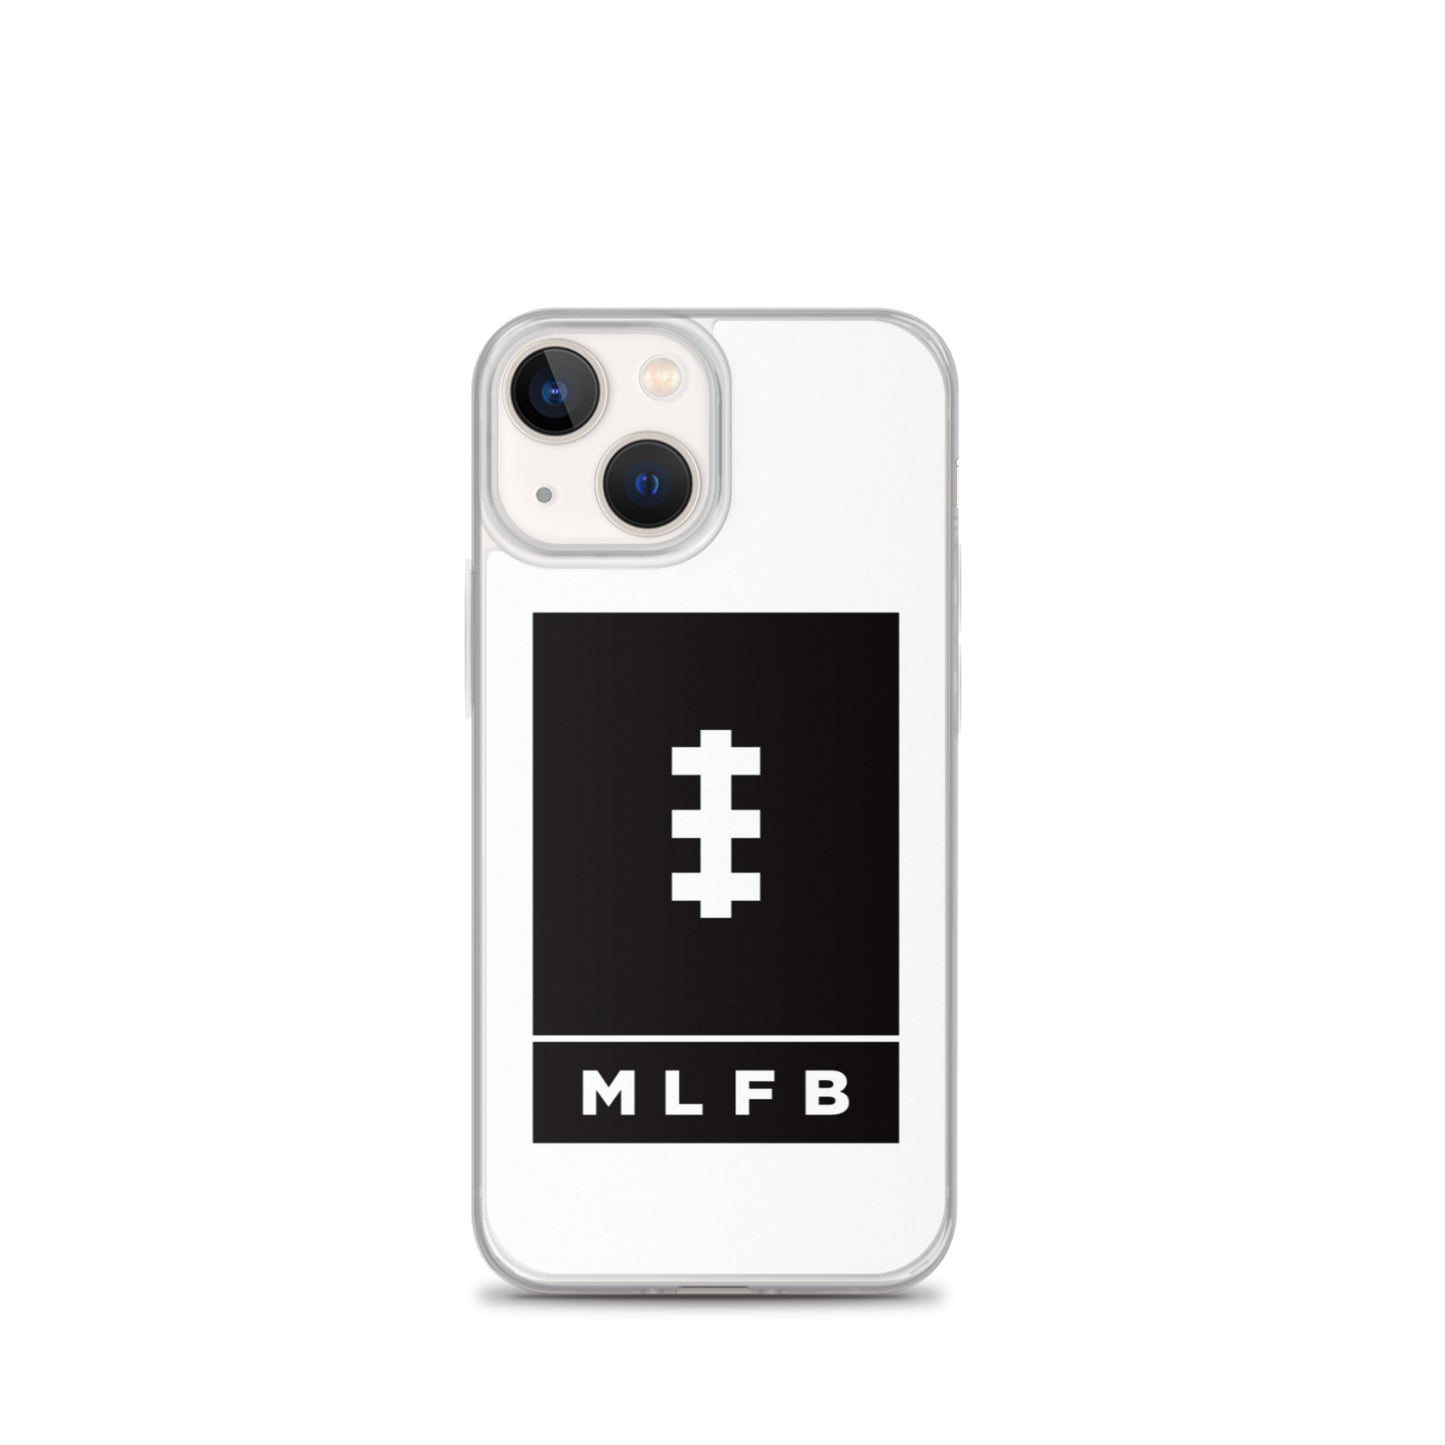 MLFB iPhone Case